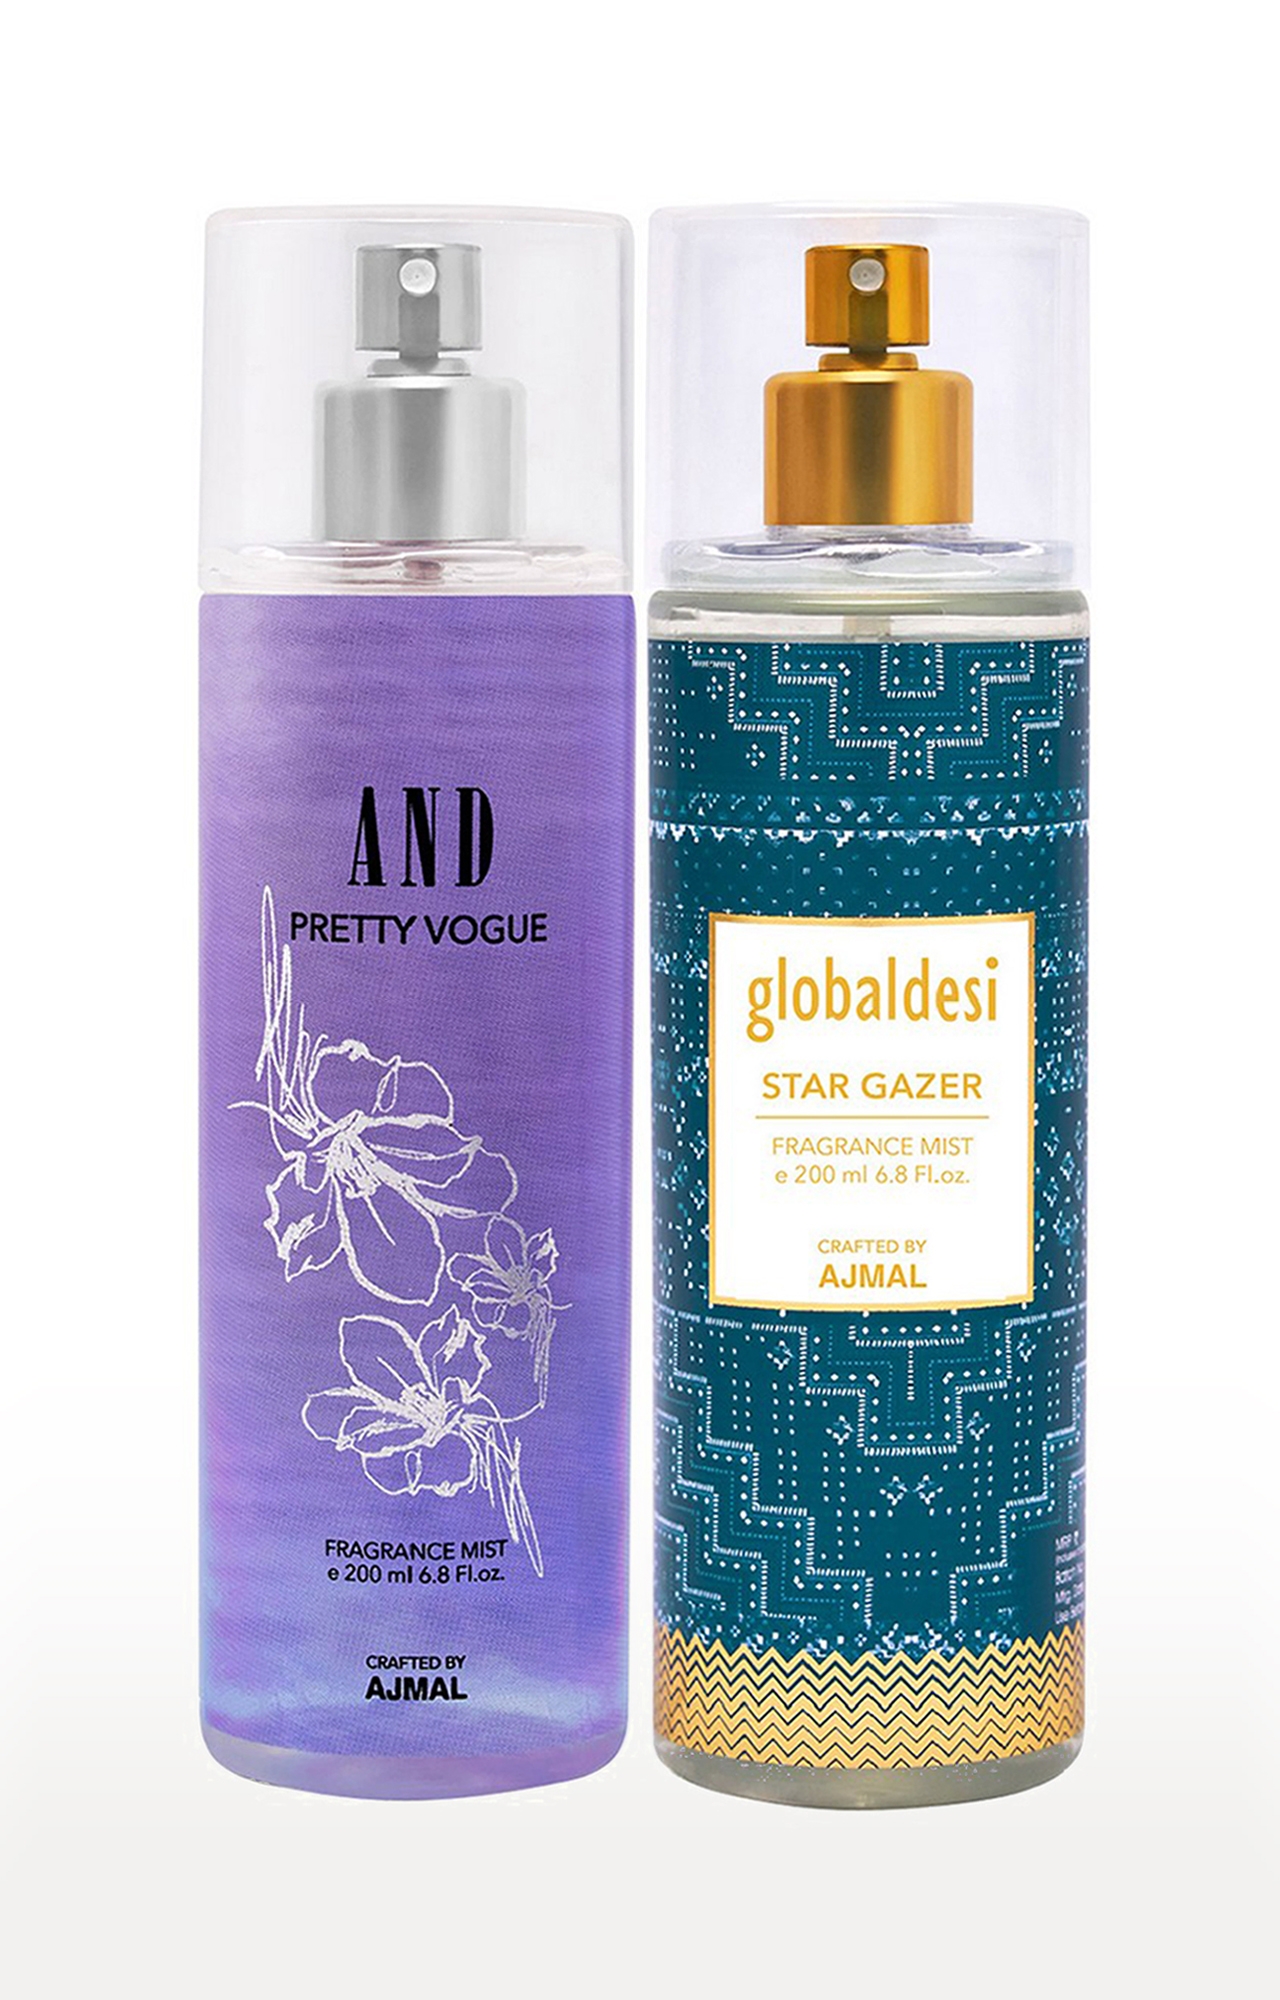 AND Pretty Vogue Body Mist 200ML & Global Desi Star Gazer Body Mist 200ML Long Lasting Scent Spray Gift For Women Perfume FREE